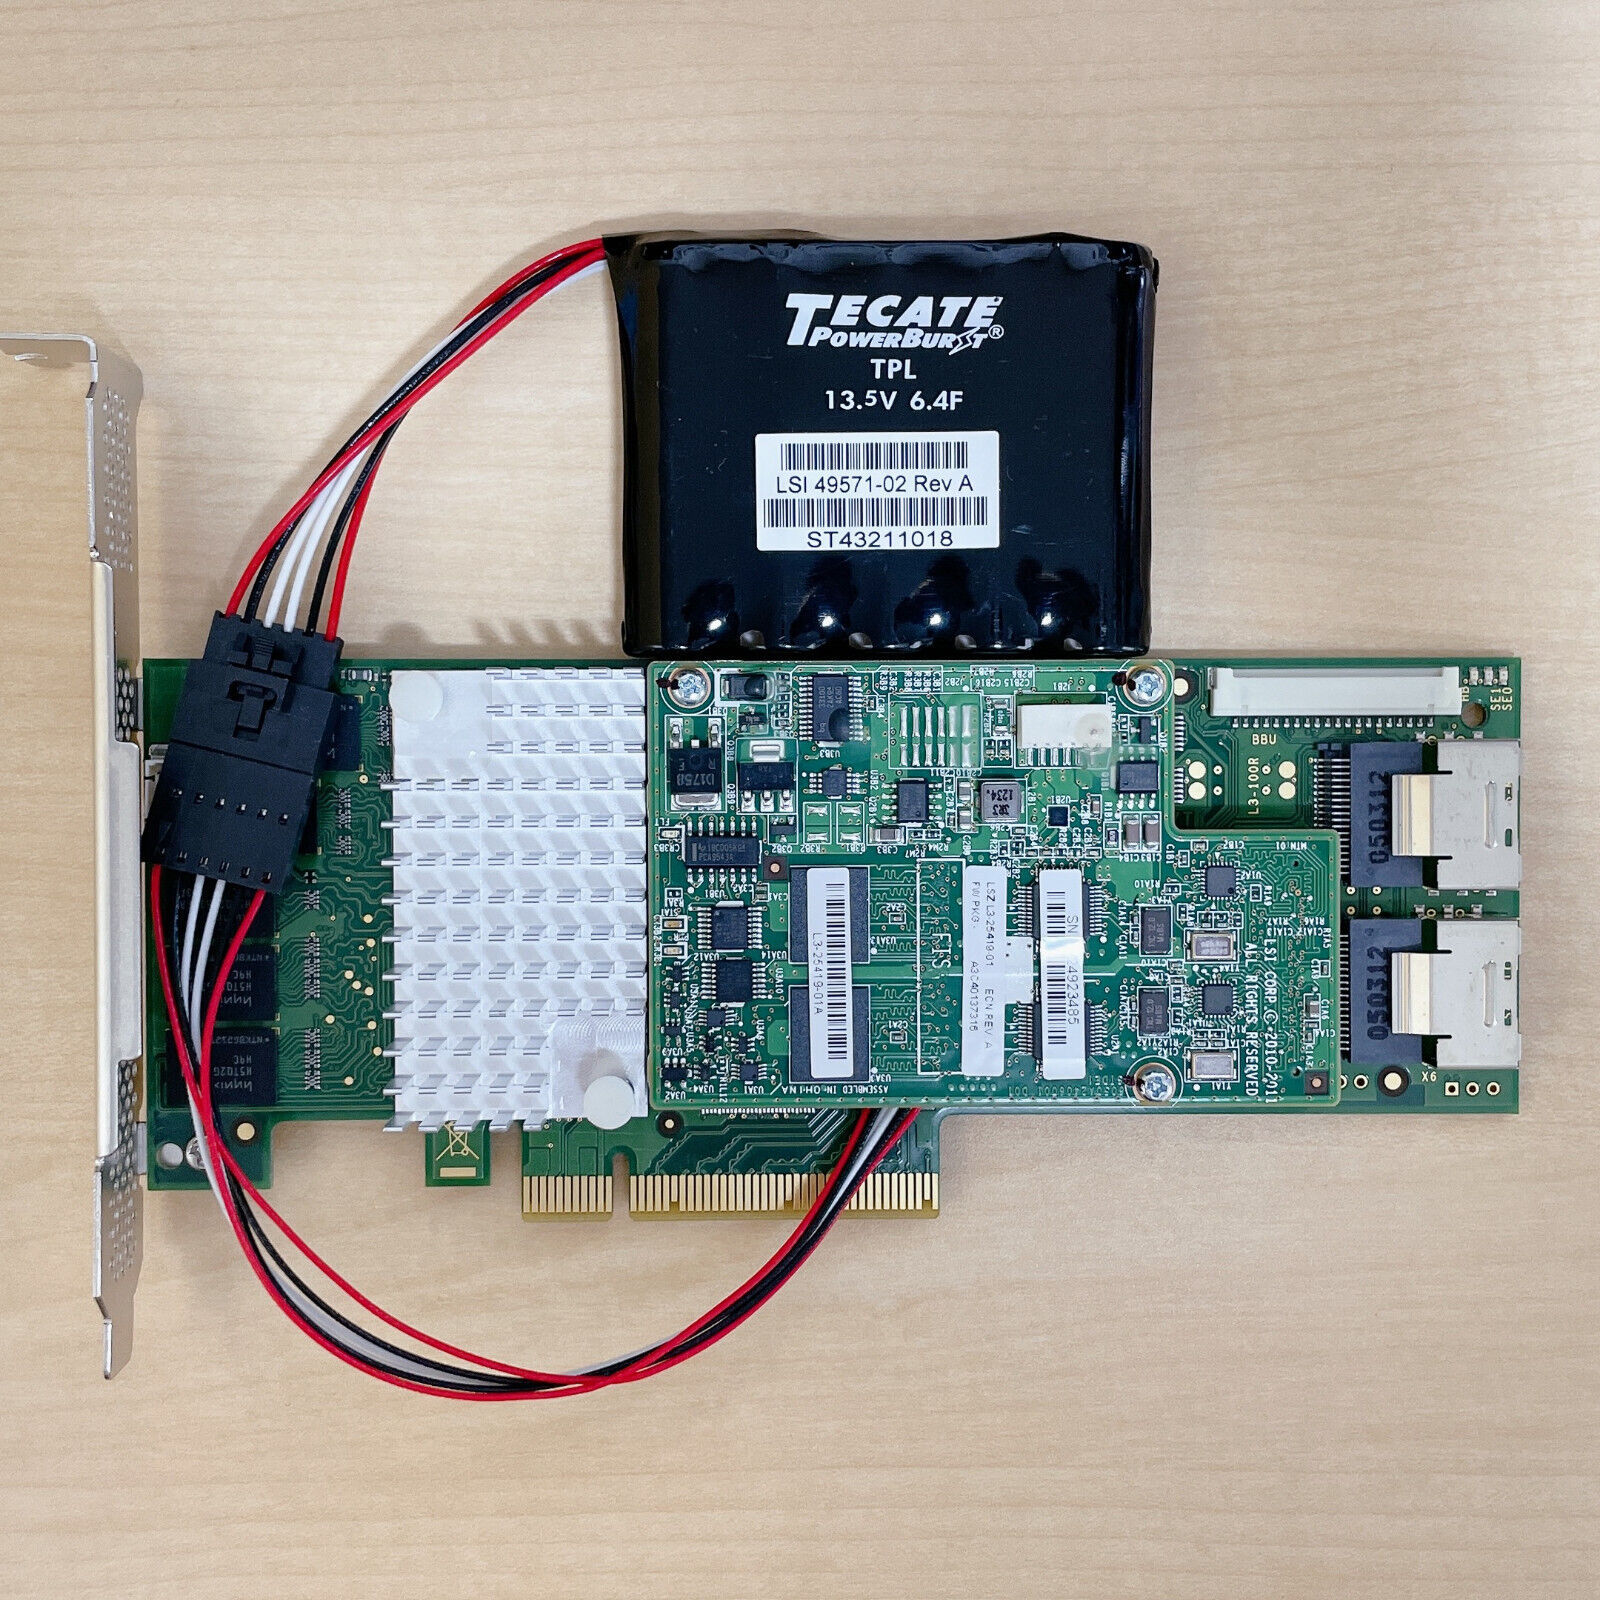 Fujitsu/LSI MegaRAID D3116-C26 PCIe3.0 RAID5/6 1GB+FBU Similar to SAS 9271-8i